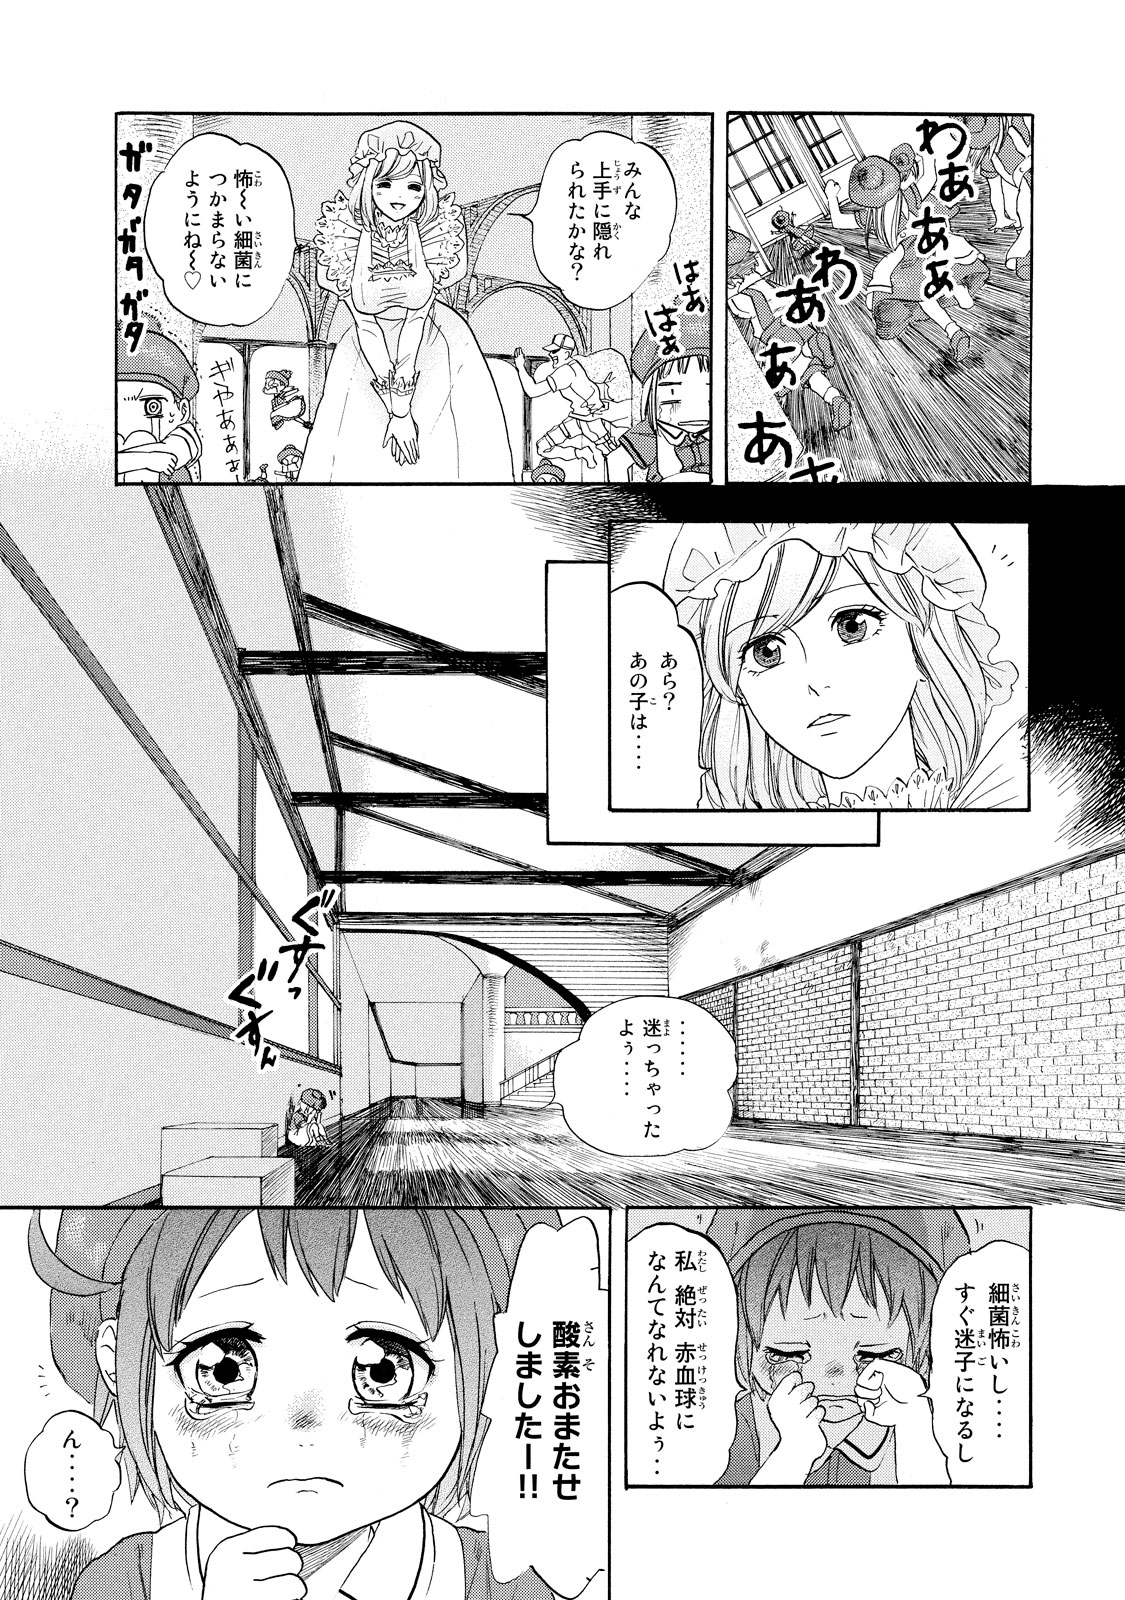 Hataraku Saibou - Chapter 7 - Page 12